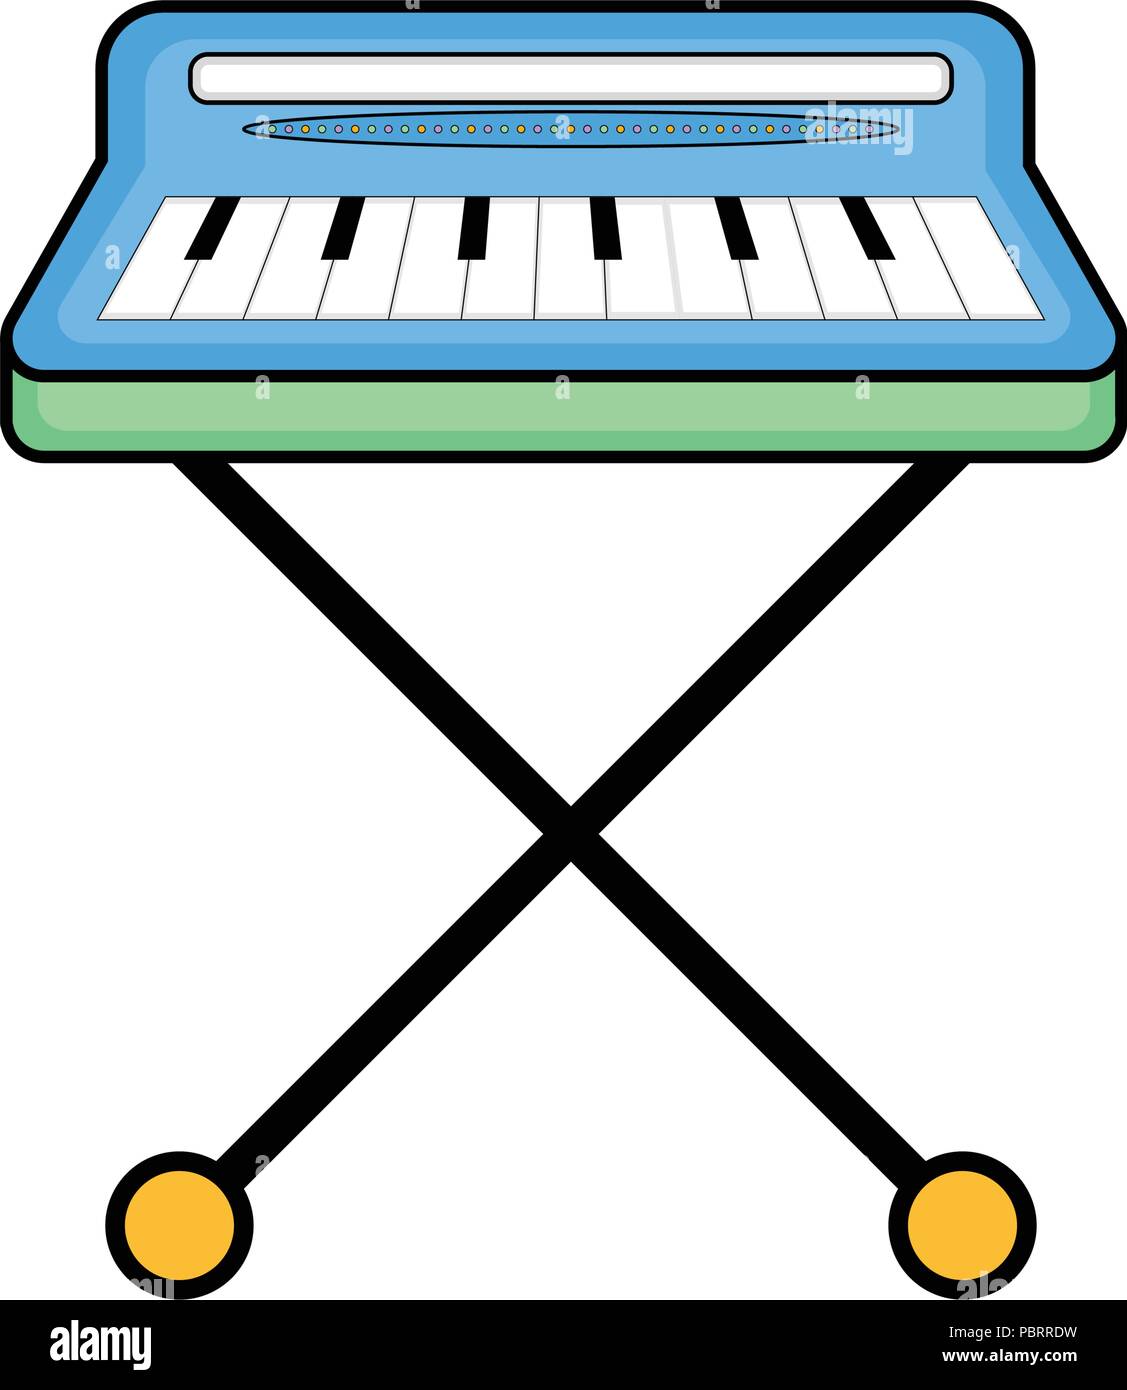 Separate Tastatur Spielzeug Symbol Stock Vektor